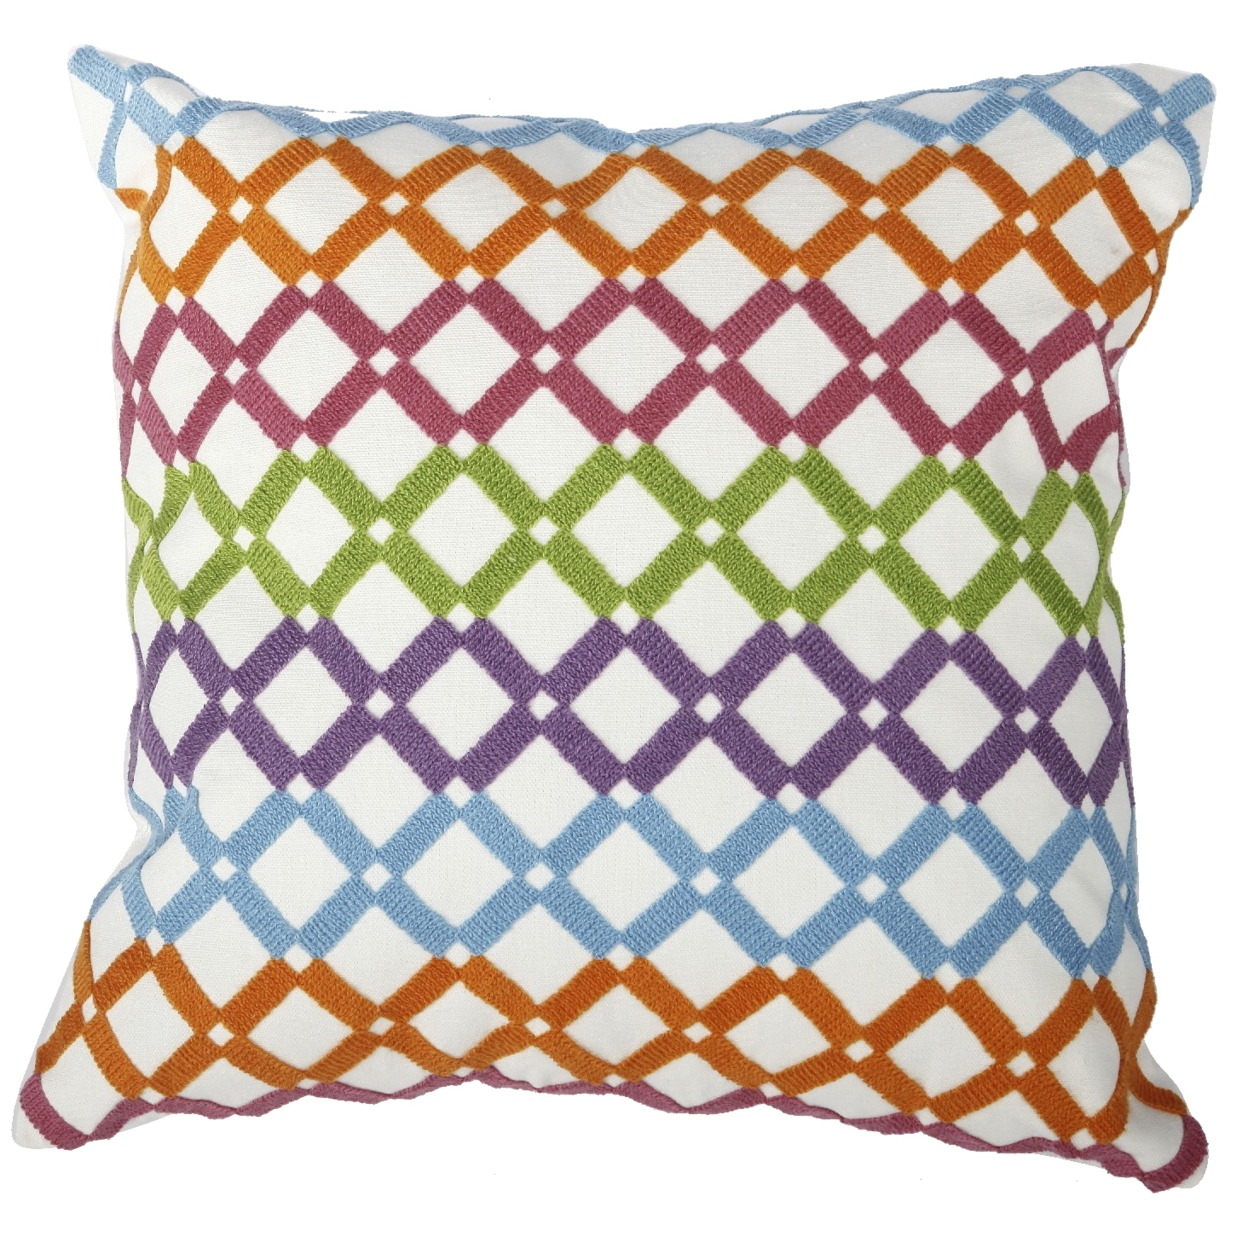 18 X 18 Inch Cotton Pillow With Lattice Embroidery, Set Of 2, Multicolor- Saltoro Sherpi